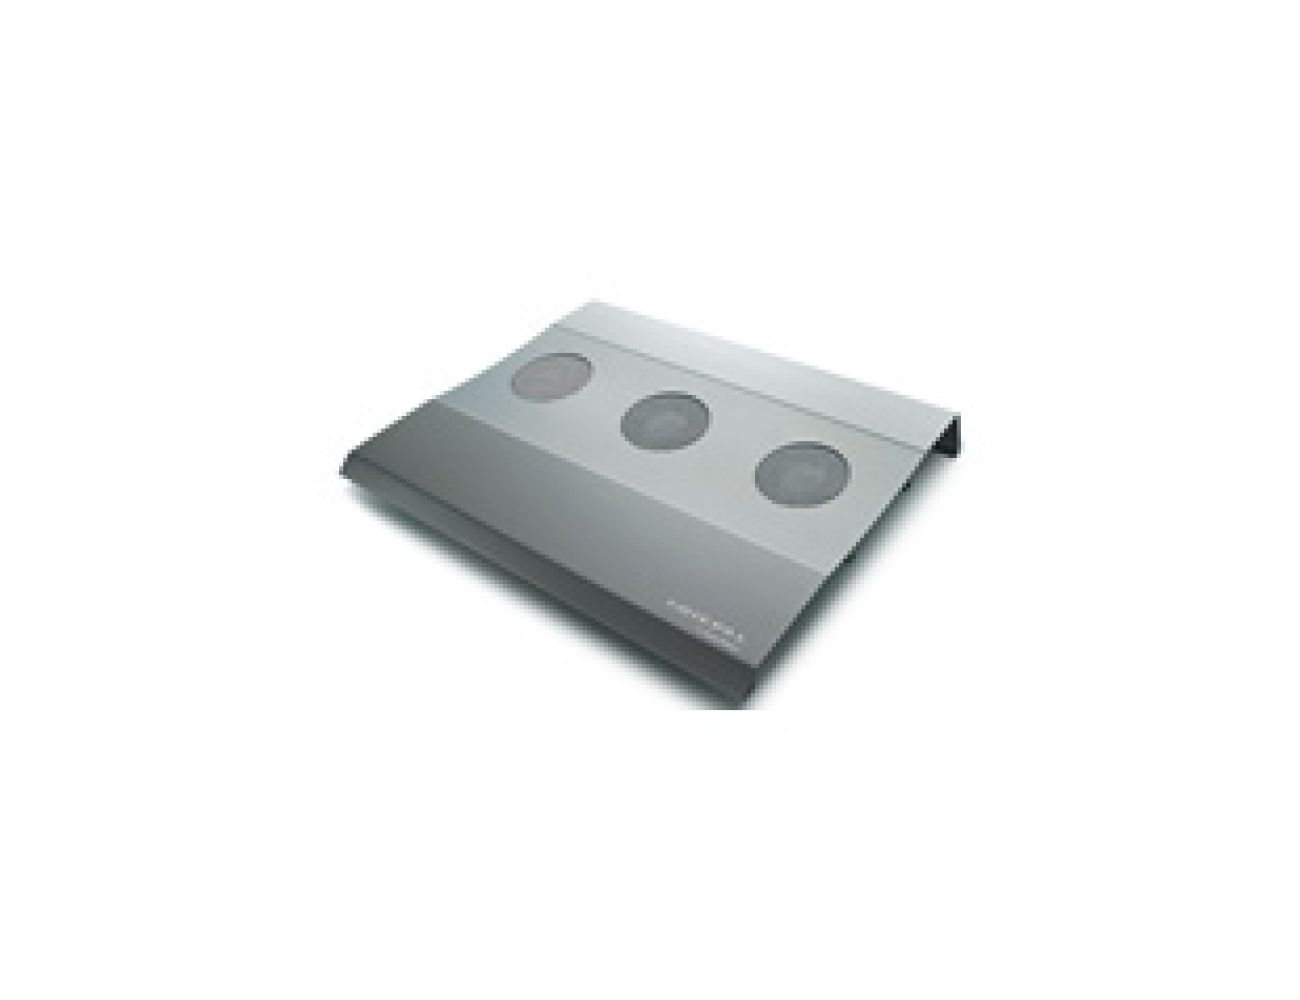 Подставка для ноутбука Cooler Master Notepal W2, алюминиевая, 3x70мм fan, Titan (R9-NBC-AWCT-GP)